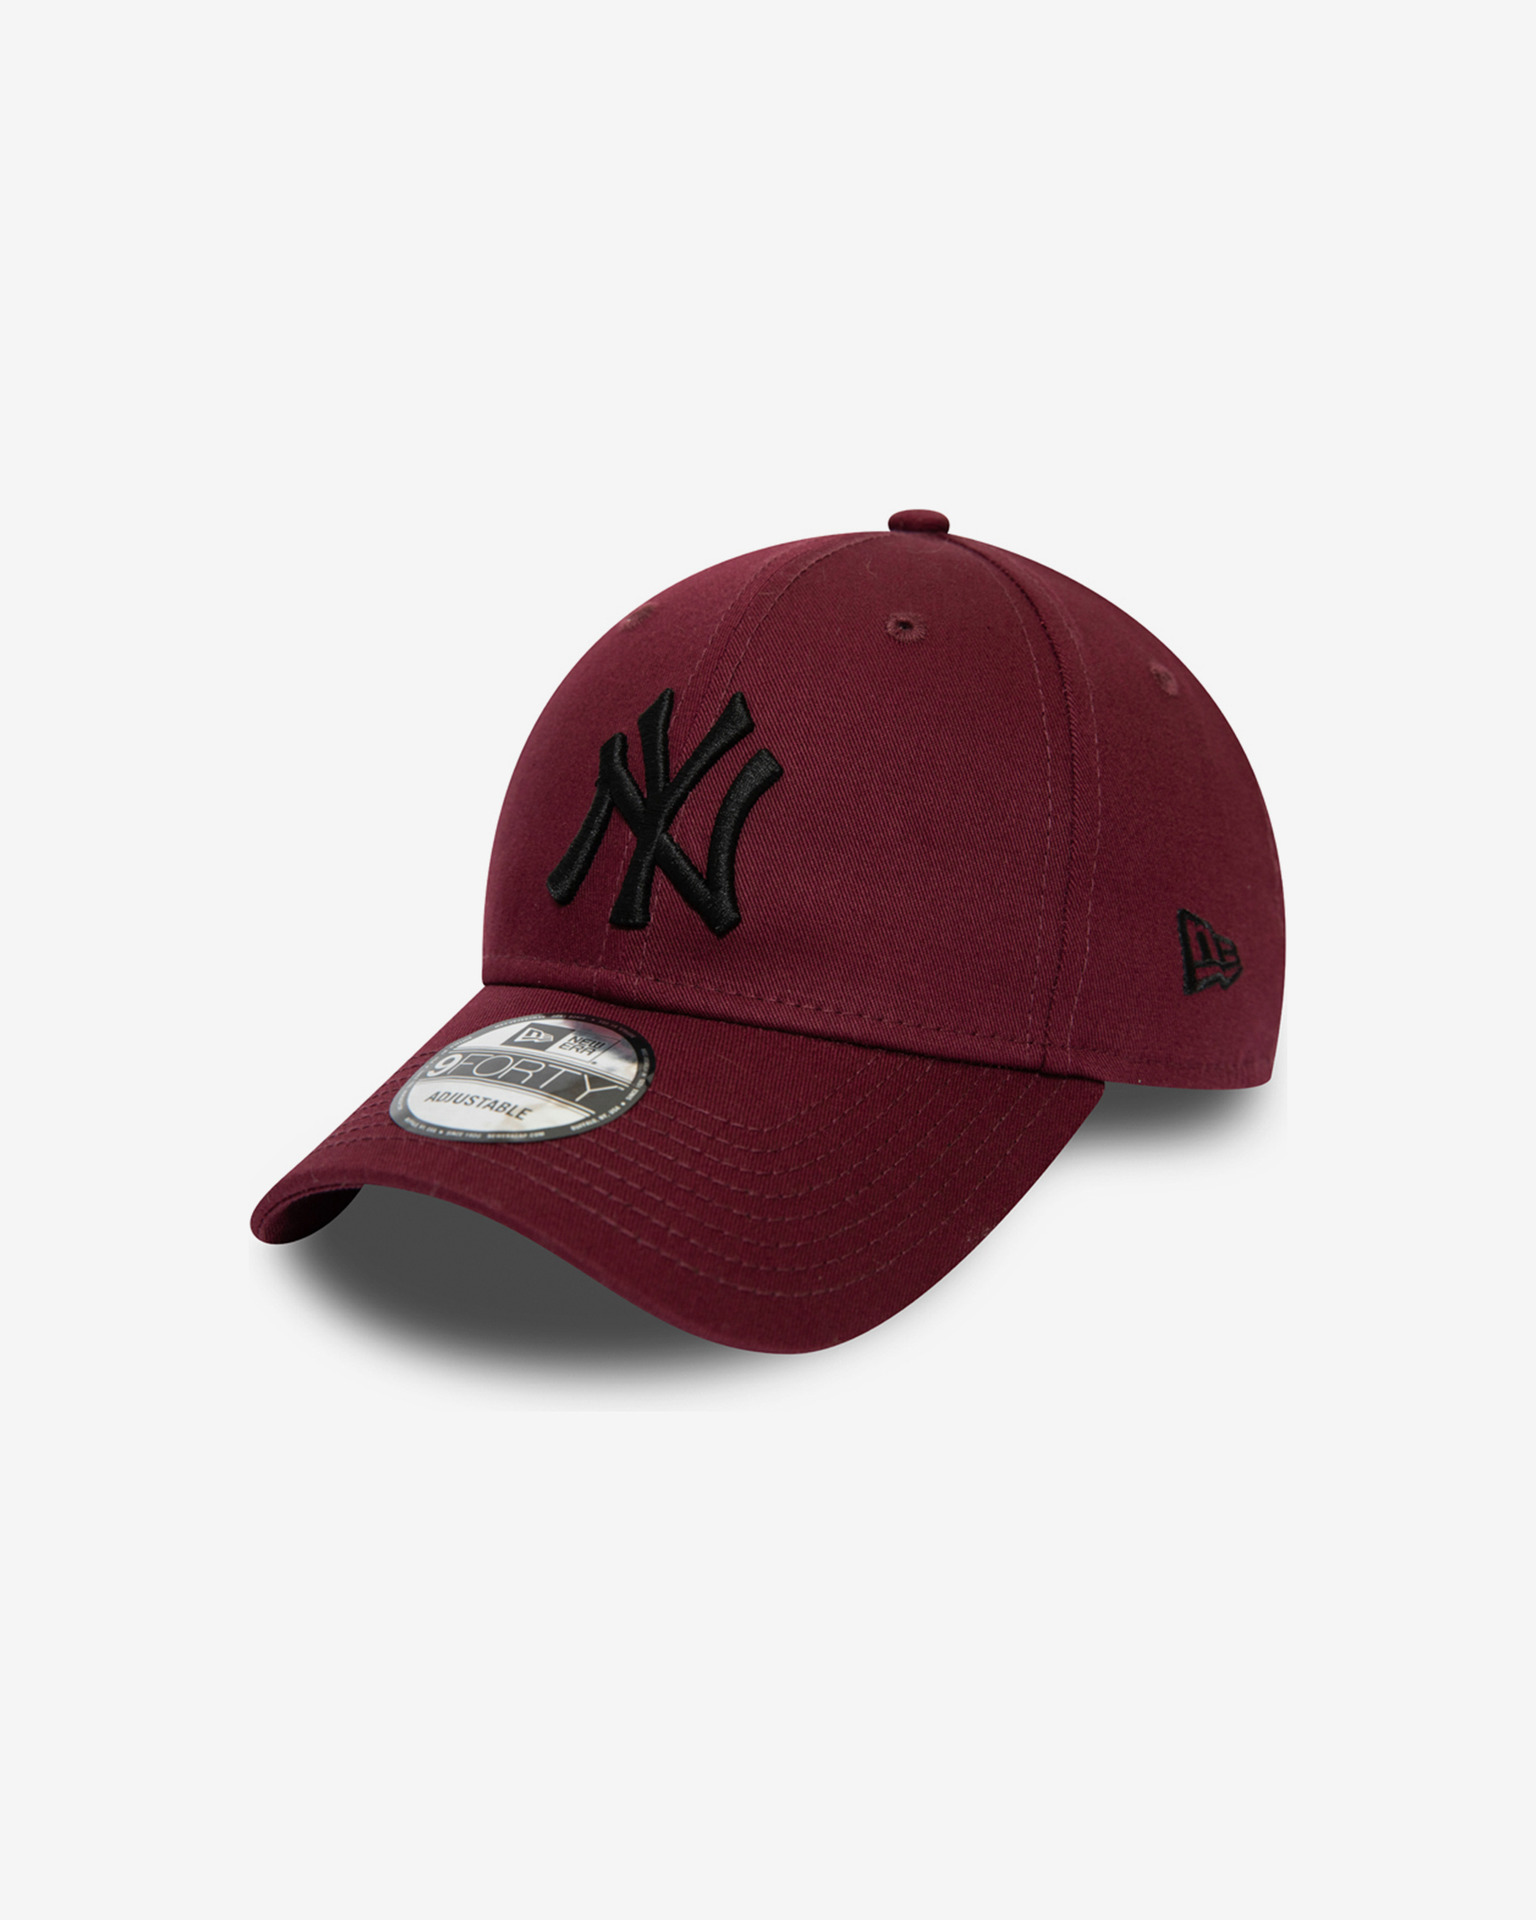 Hat next. Бейсболка New era 9forty NEYYAN. Красная кепка NY. Бейсболка NY бордовая. 9forty унисекс - кепка женская.